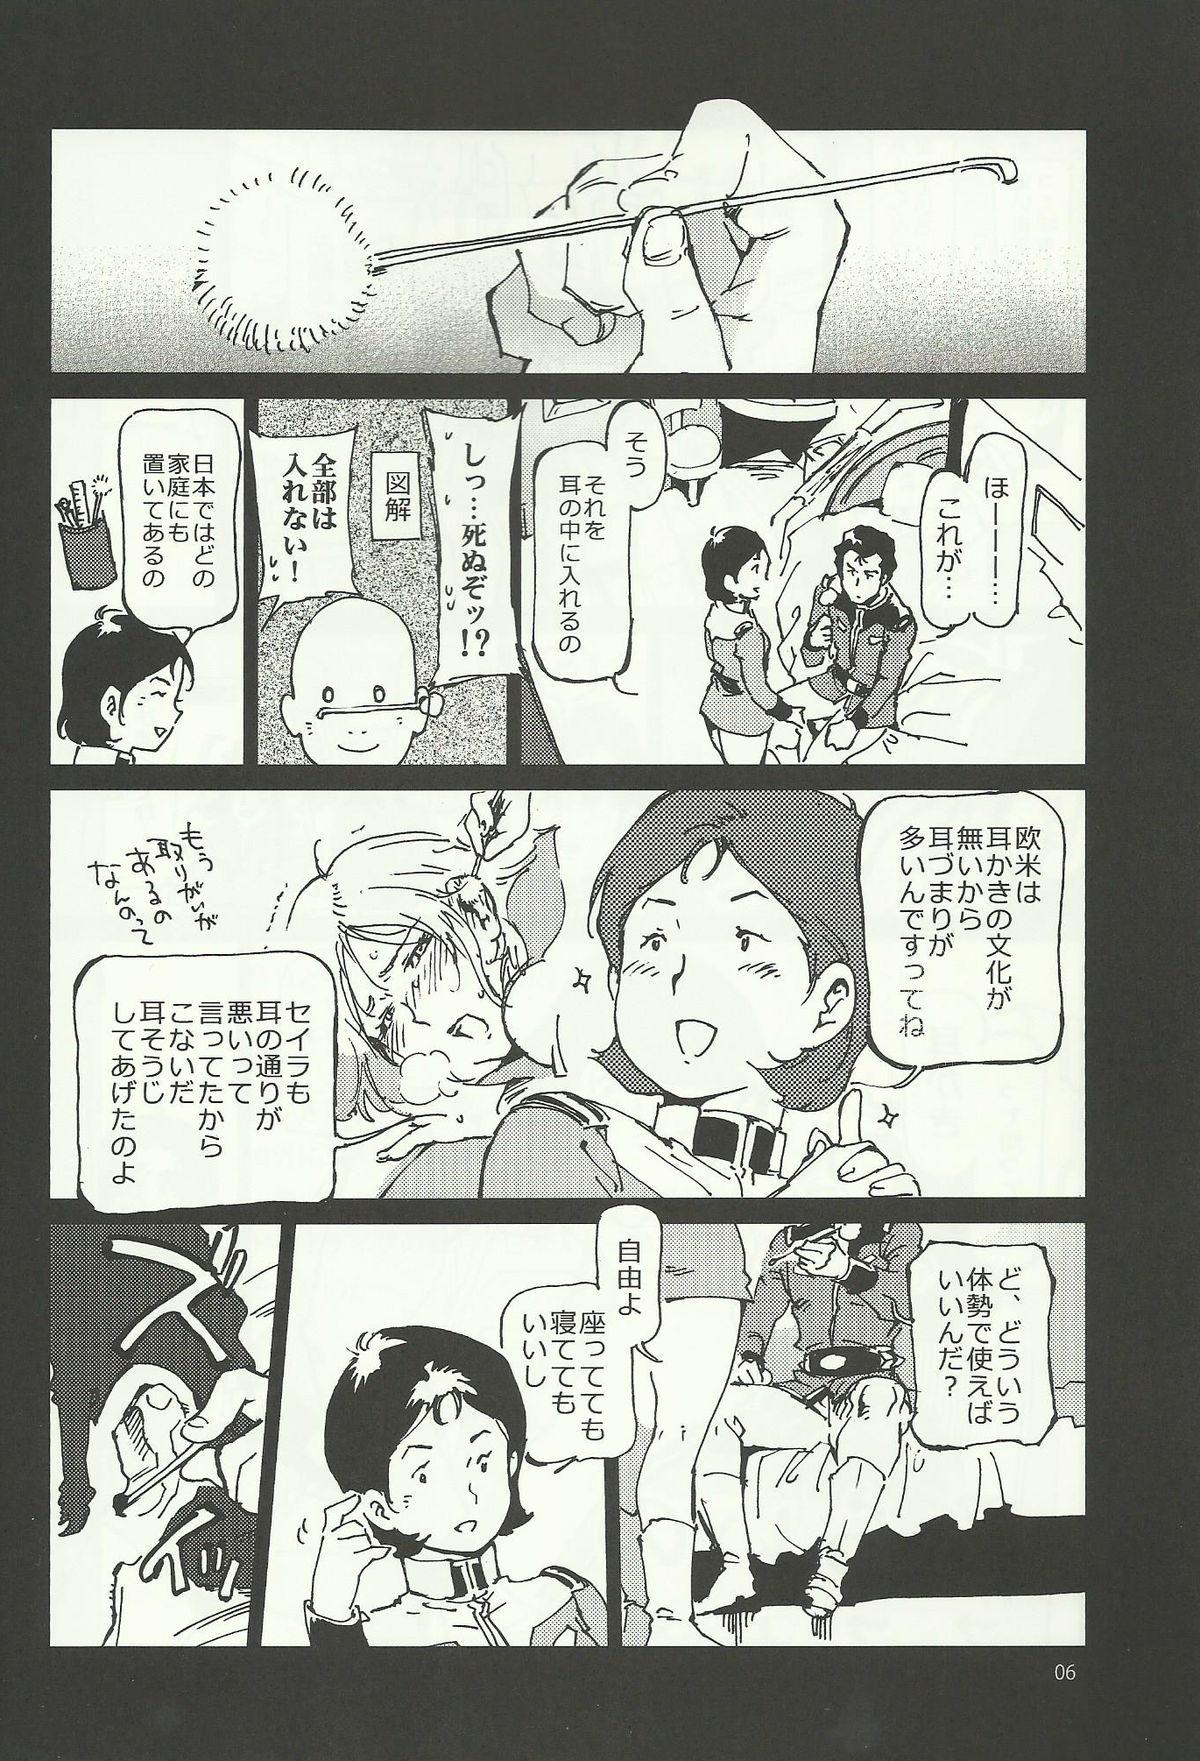 Latina Mirai no Mimikaki - Mobile suit gundam Ladyboy - Page 5